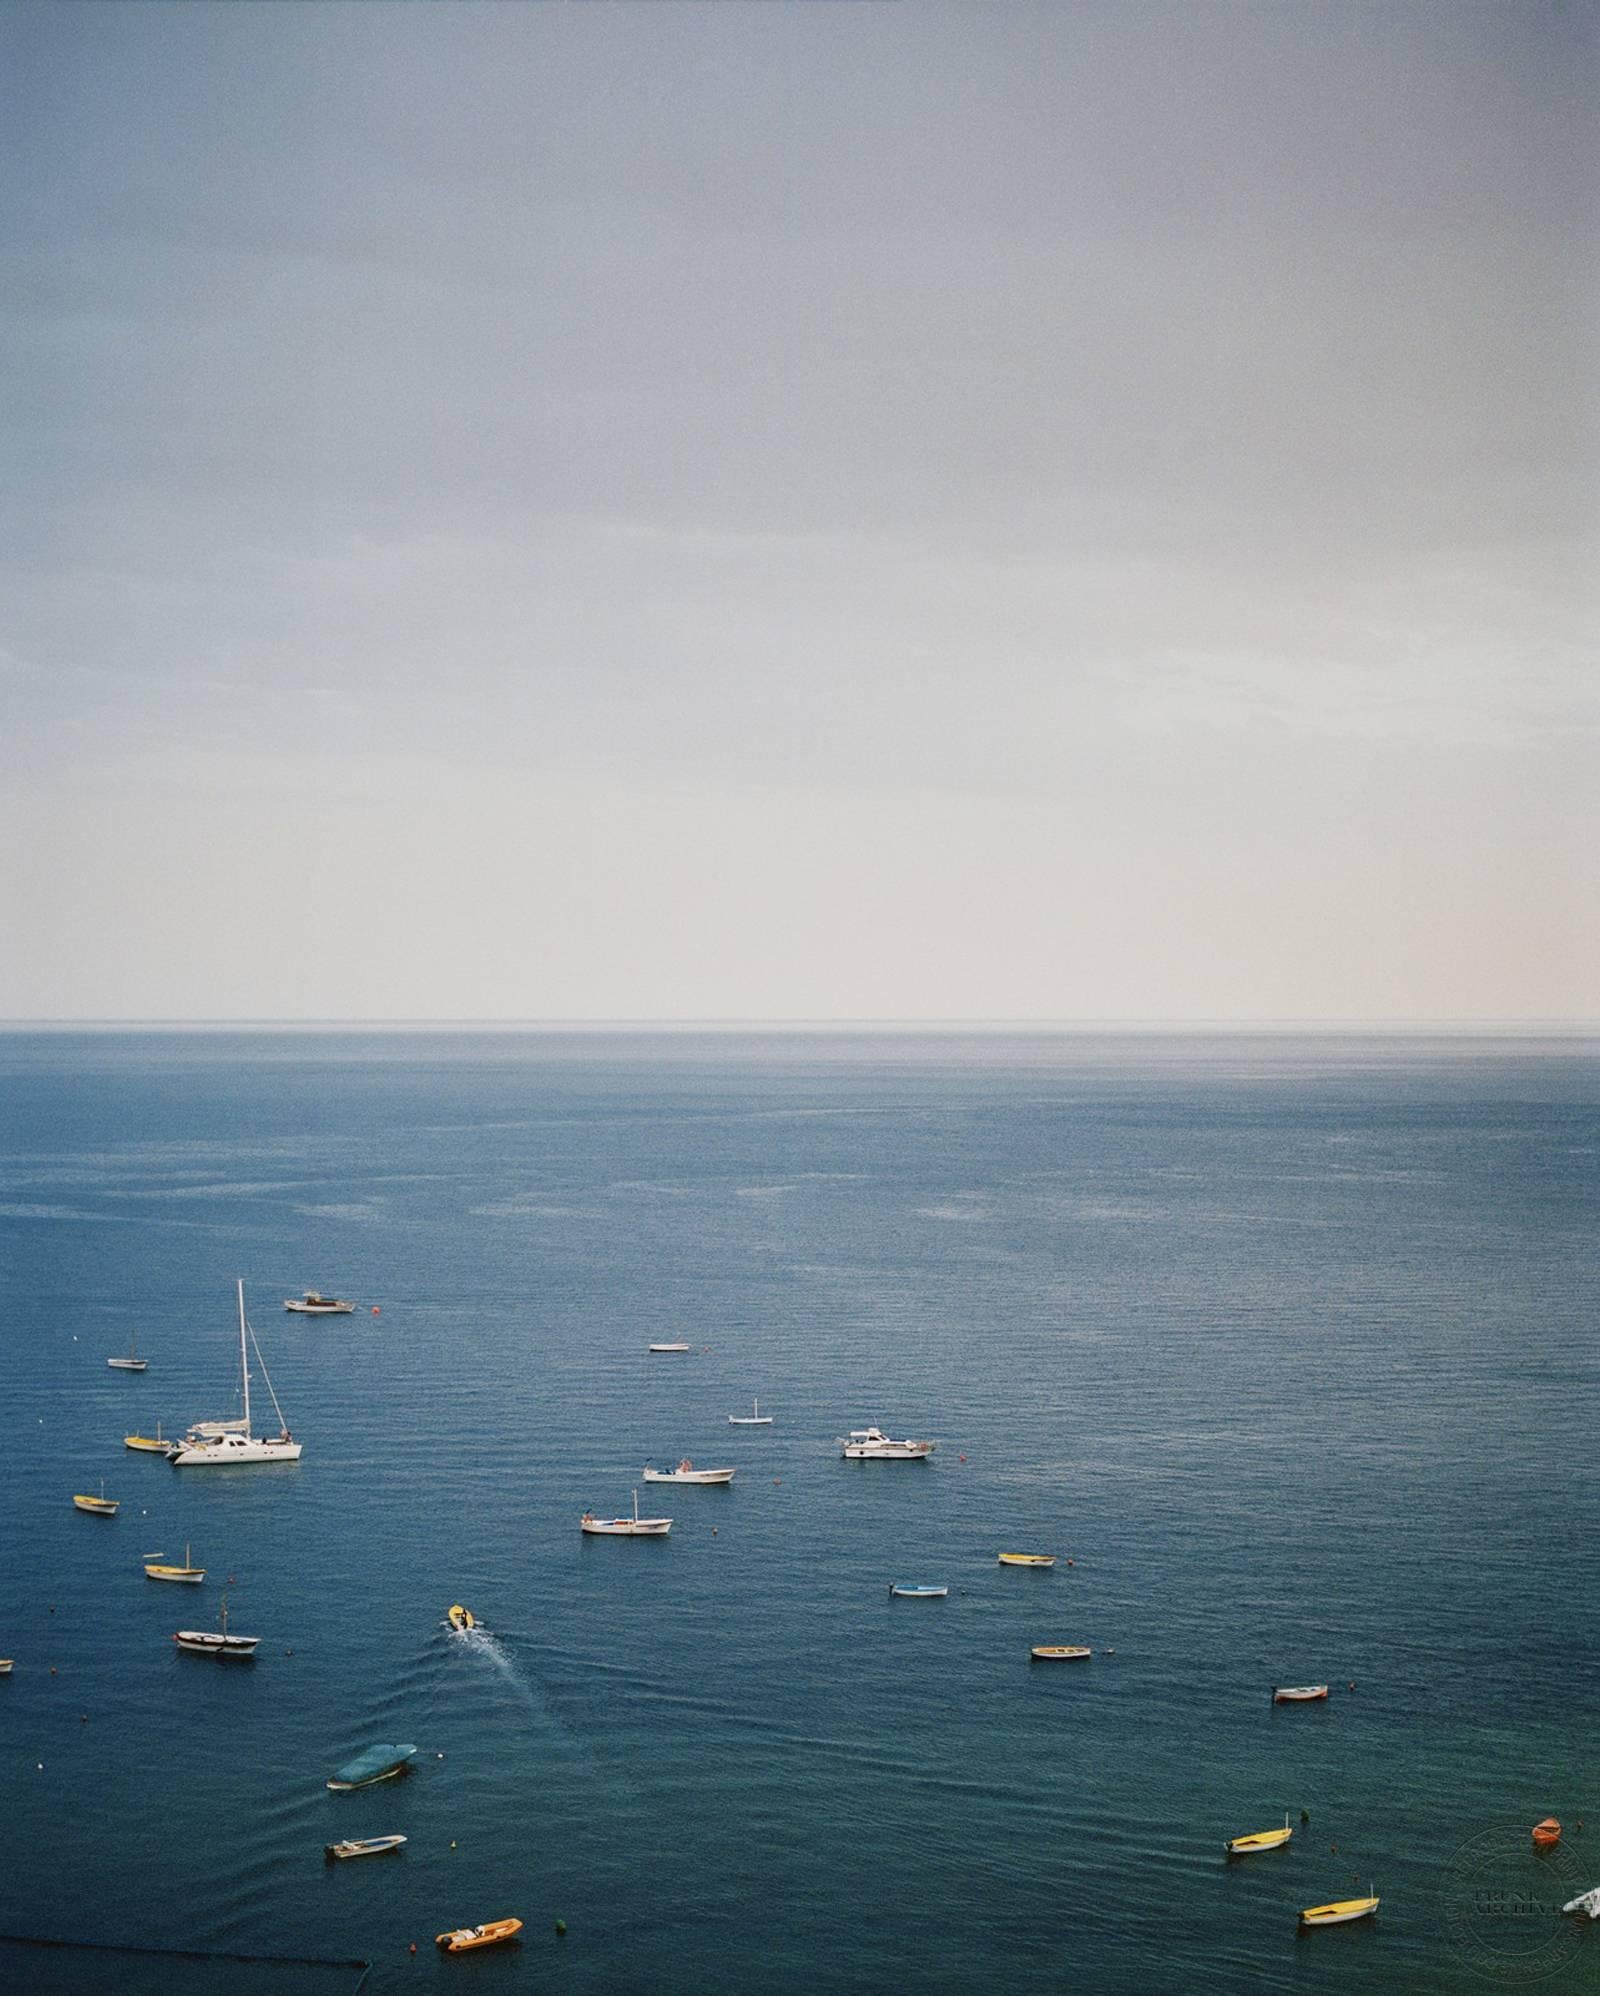 Simon Watson Color Photograph - Seascape (Boats in Harbor)